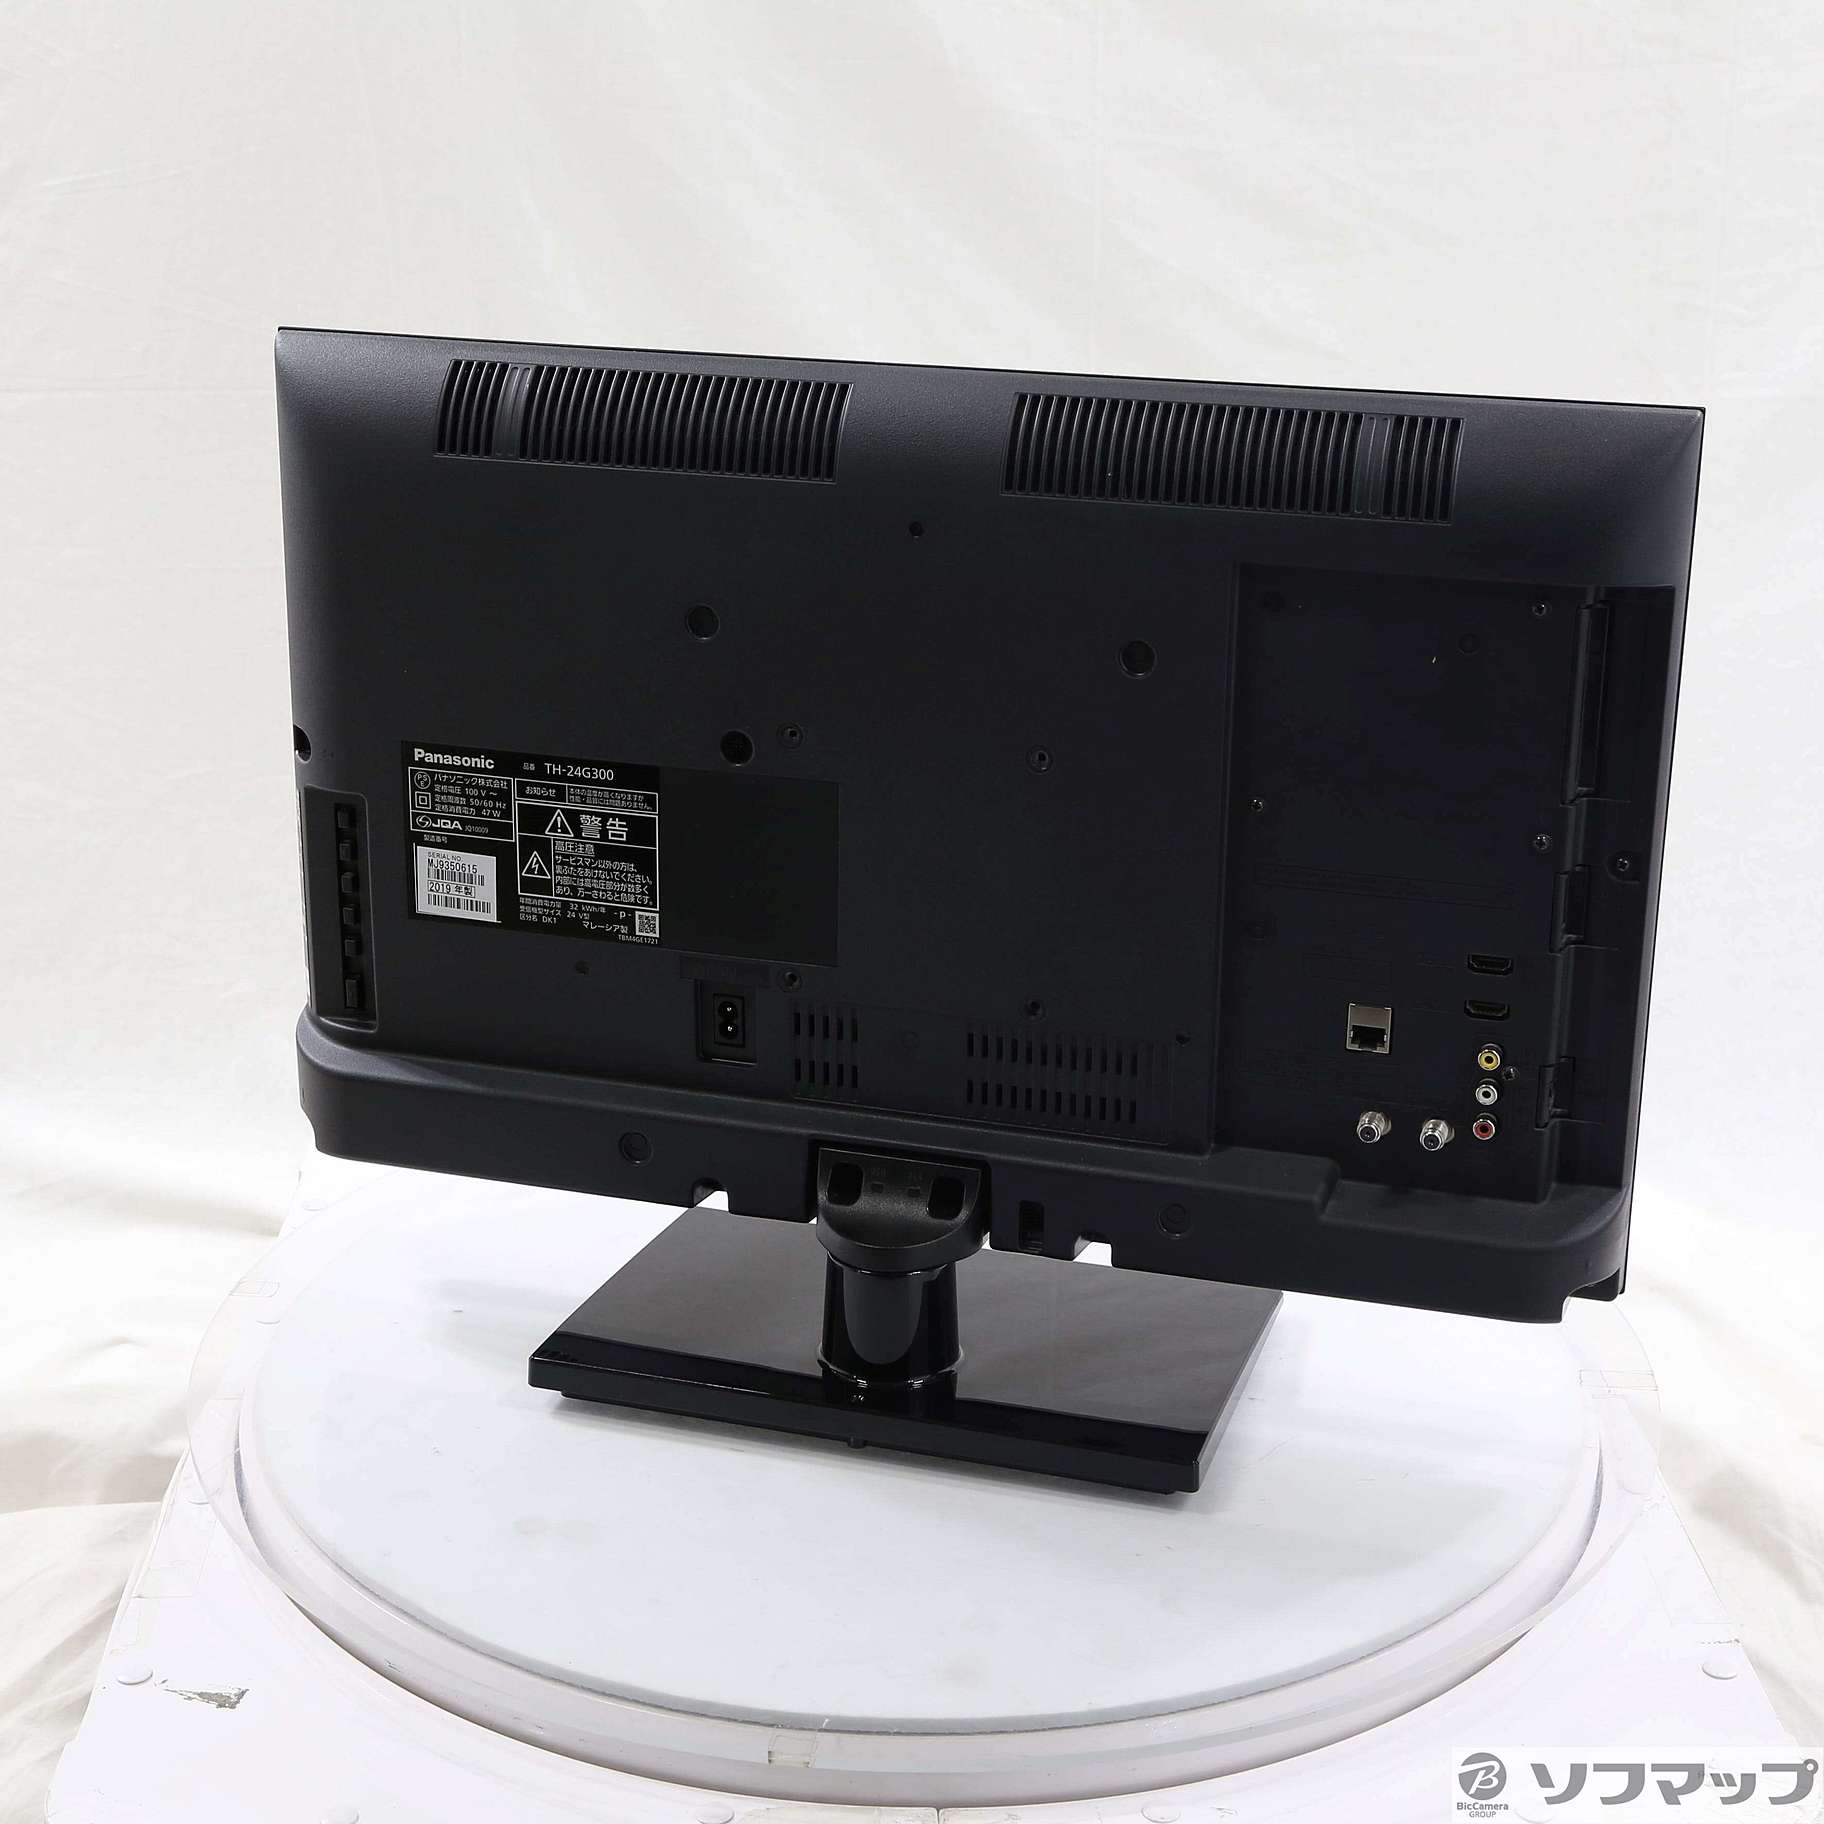 Panasonic ハイビジョン液晶テレビ TH-24G300 - テレビ/映像機器